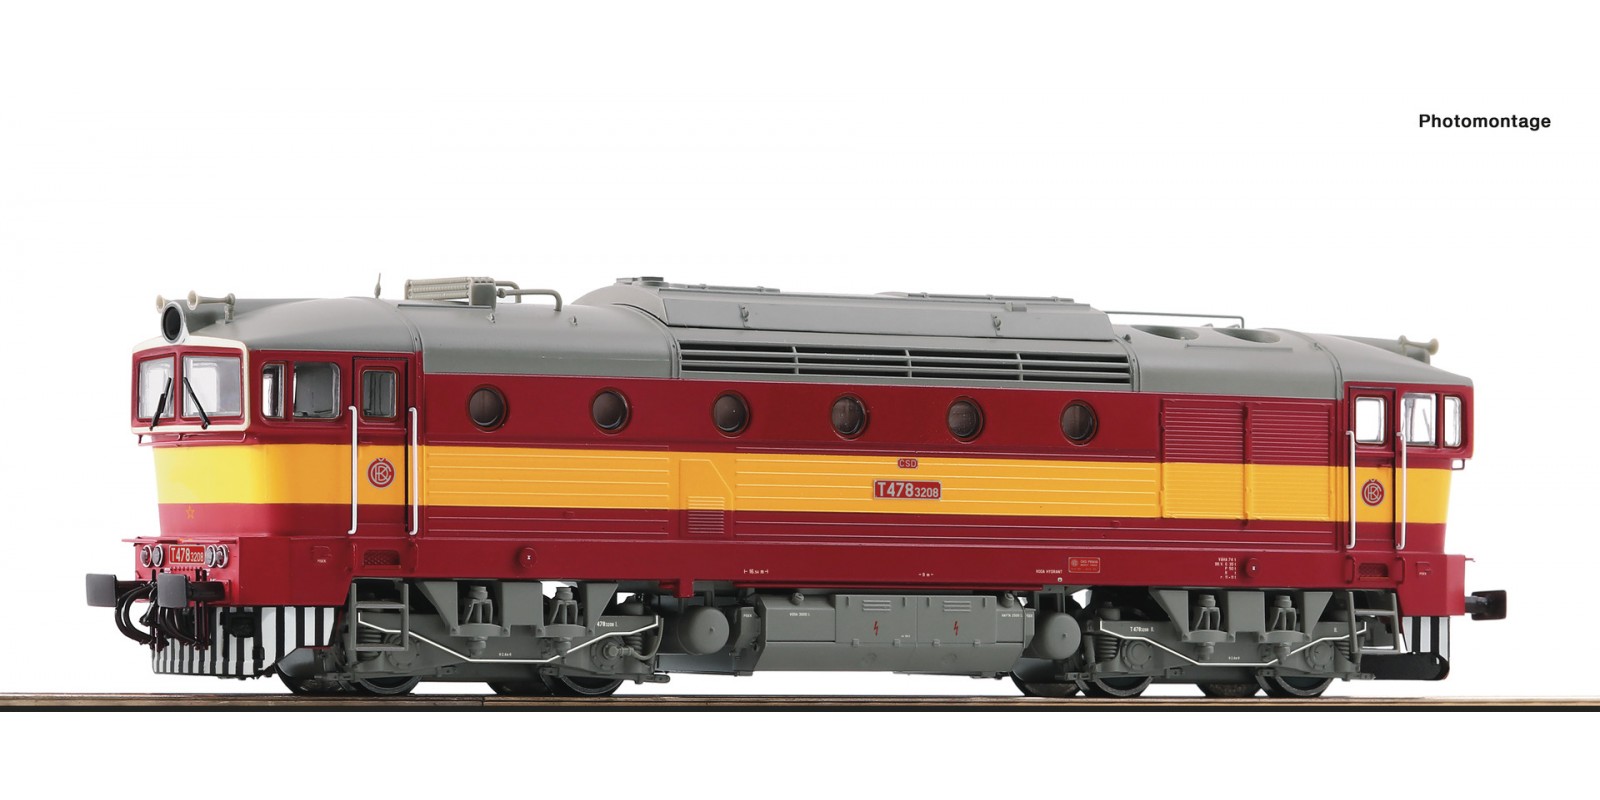 RO70024 Diesel locomotive T478 3208, CSD